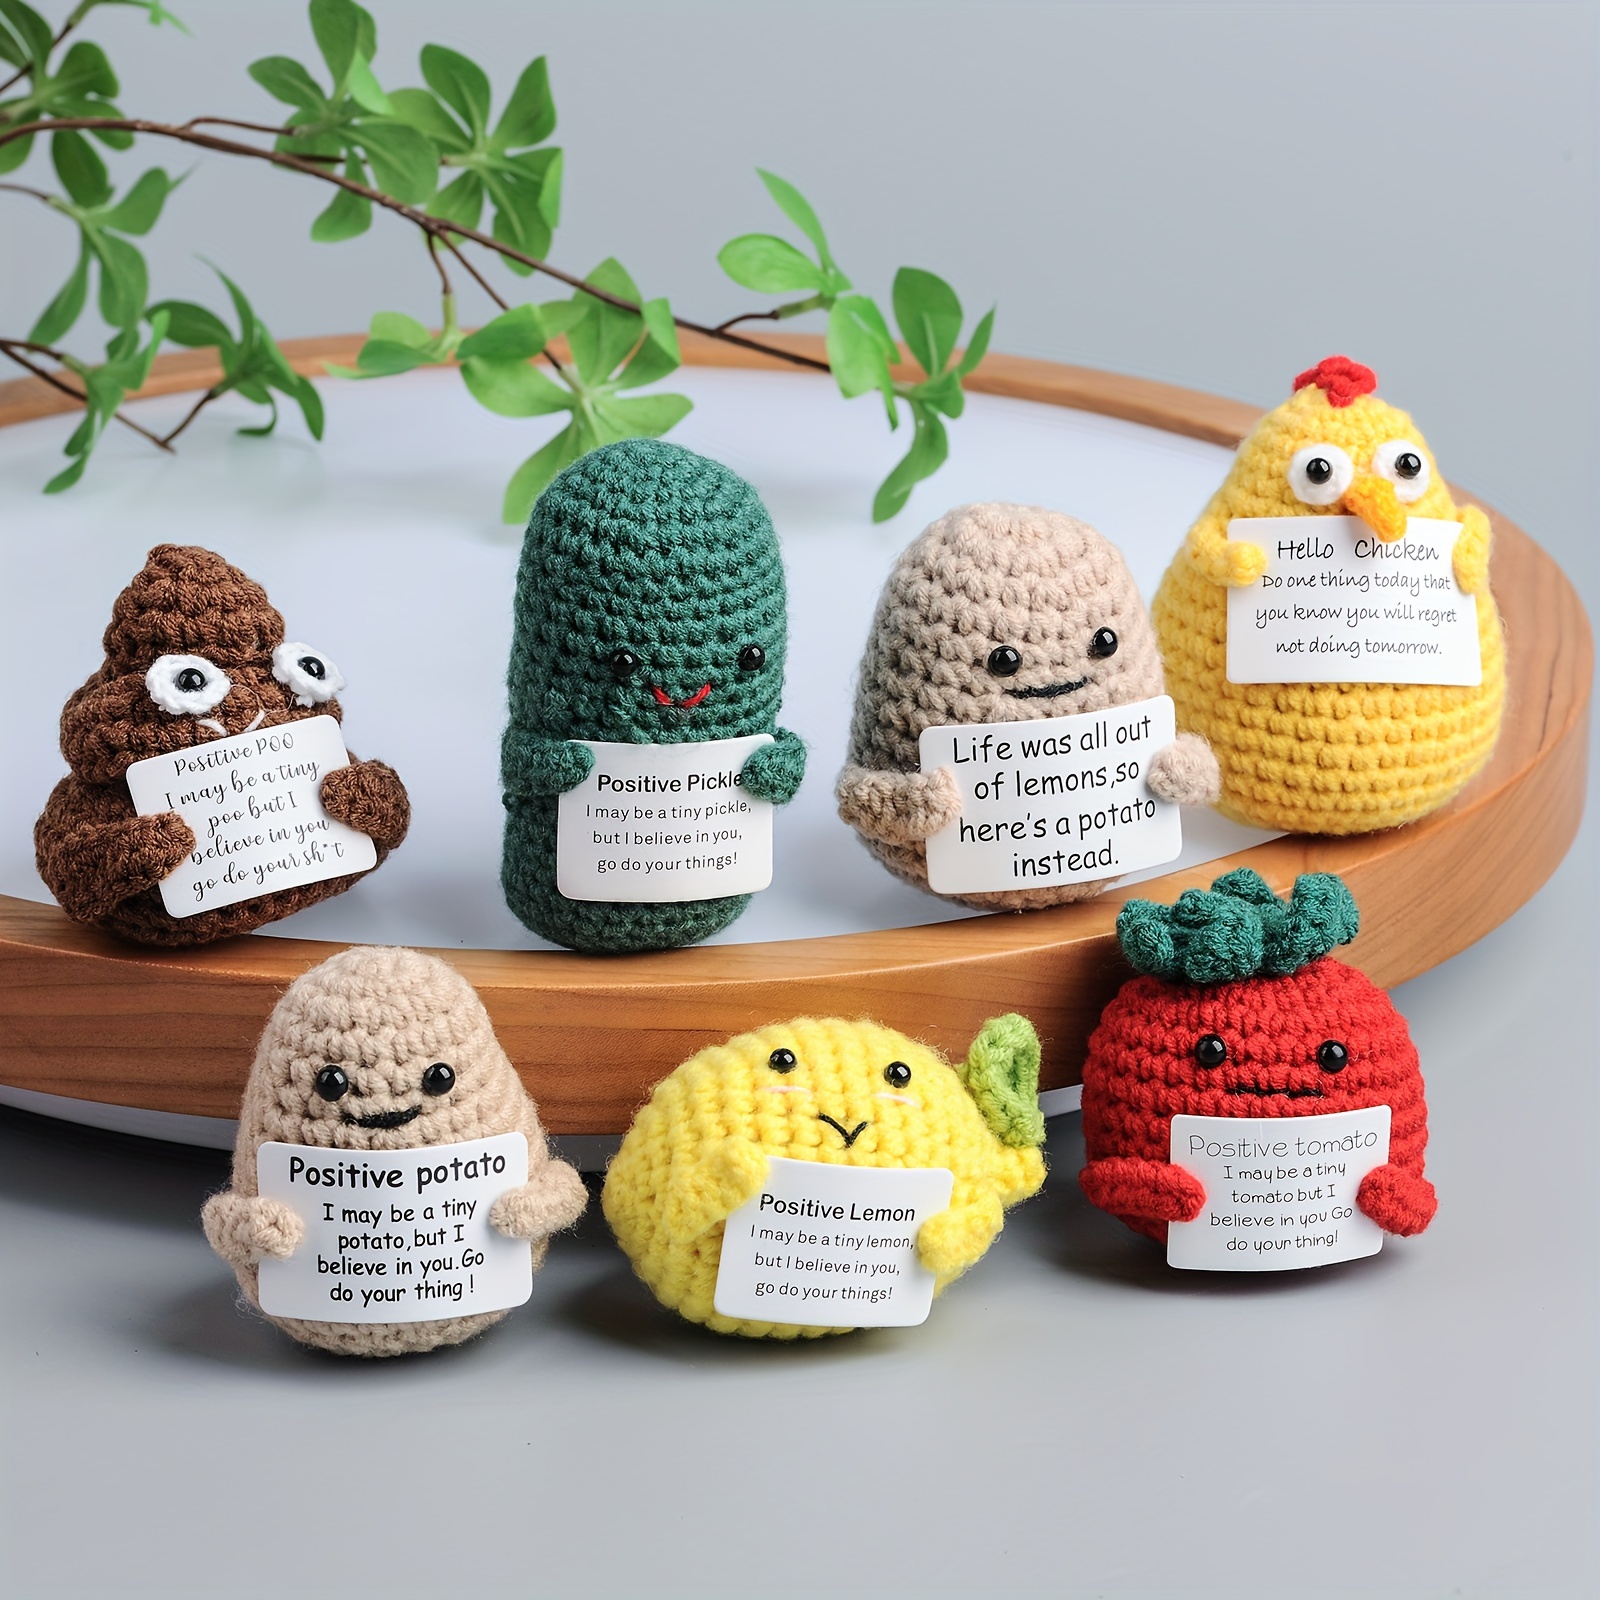 Crochet Positive Poo, Cute Poo Decor, Crochet Emotional Support